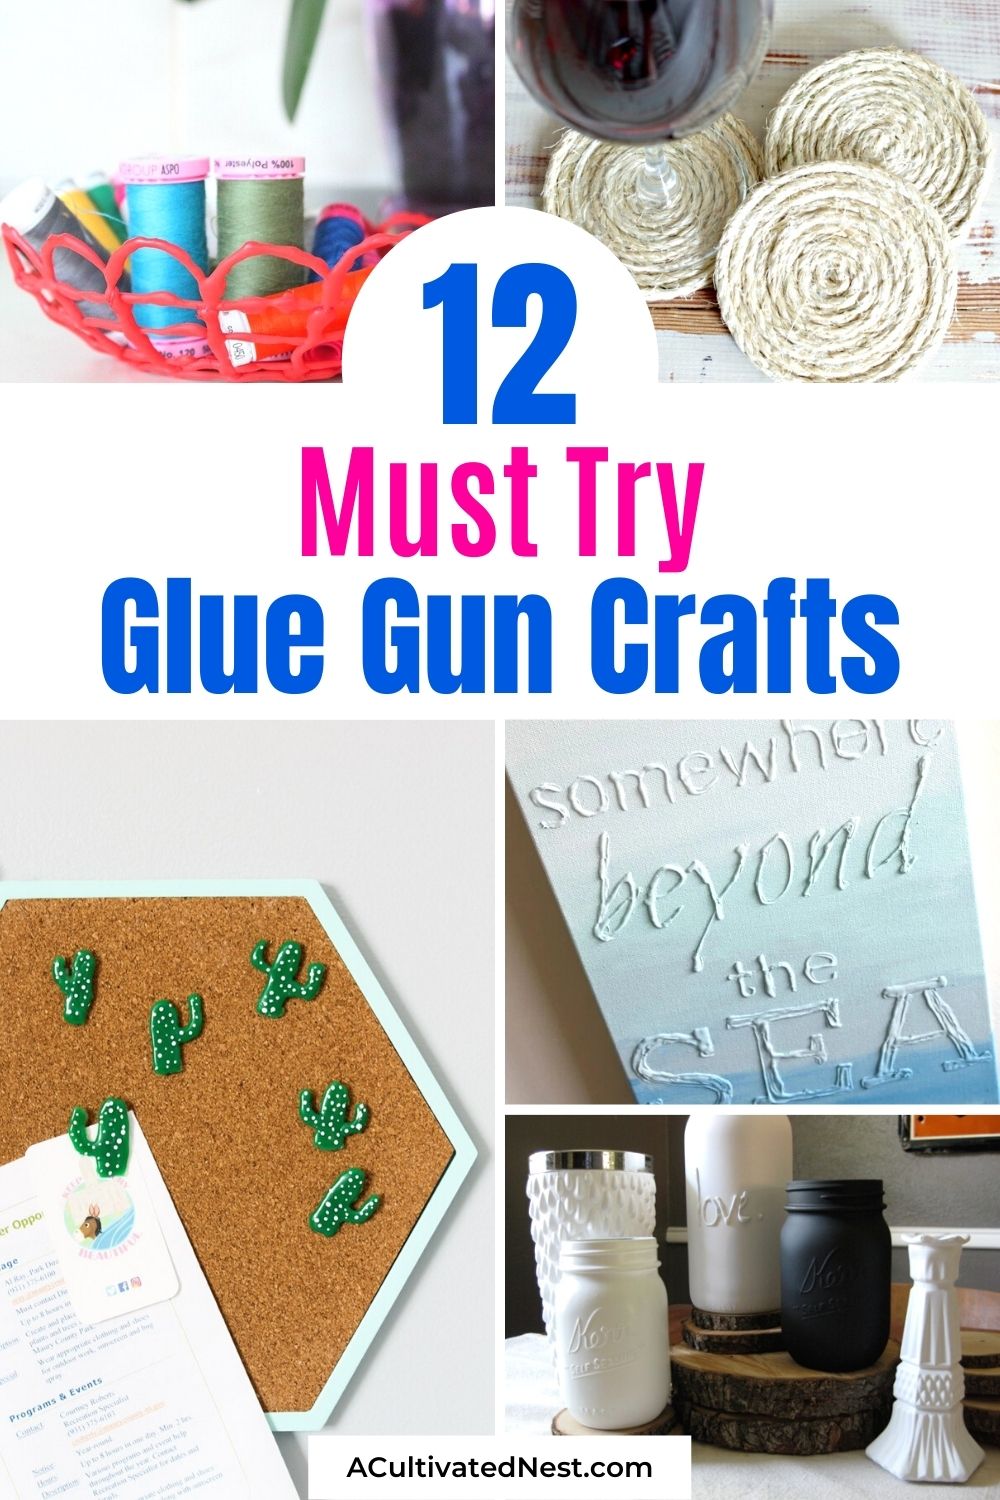 12 Must Try Glue Gun Crafts- A Cultivated Nest